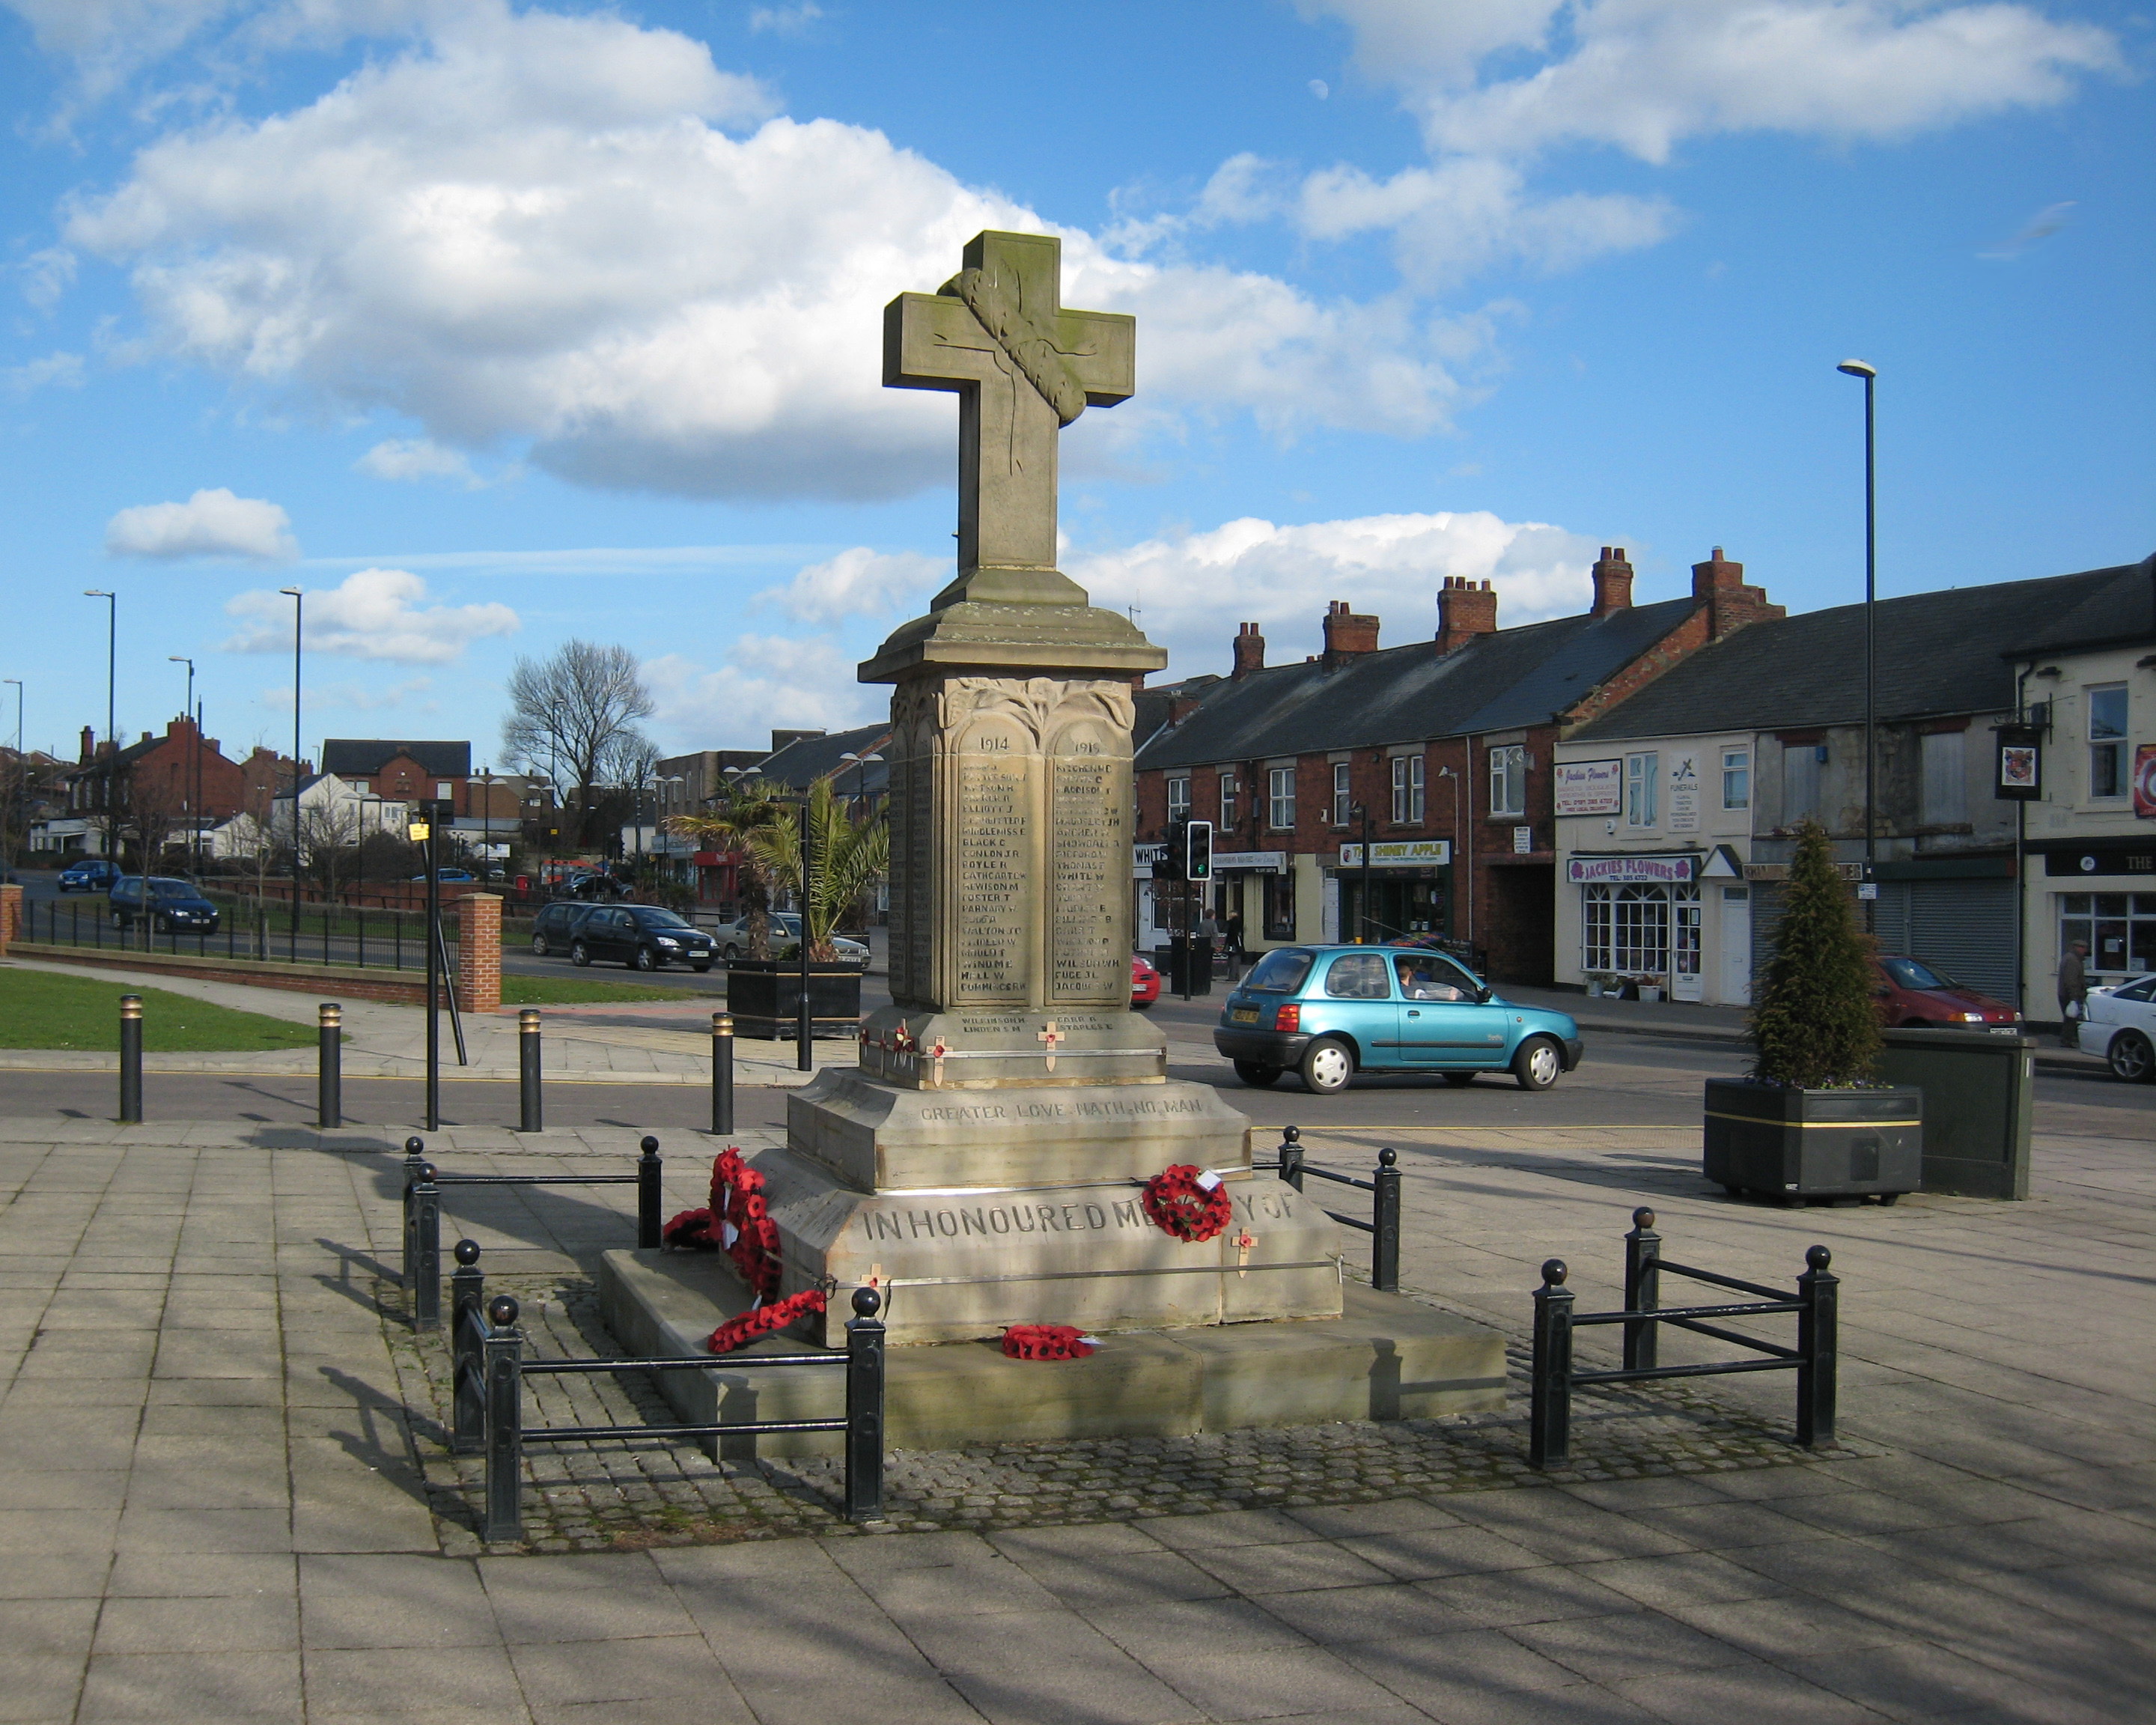 The War Memorial at Shiney Row, Co. Durham